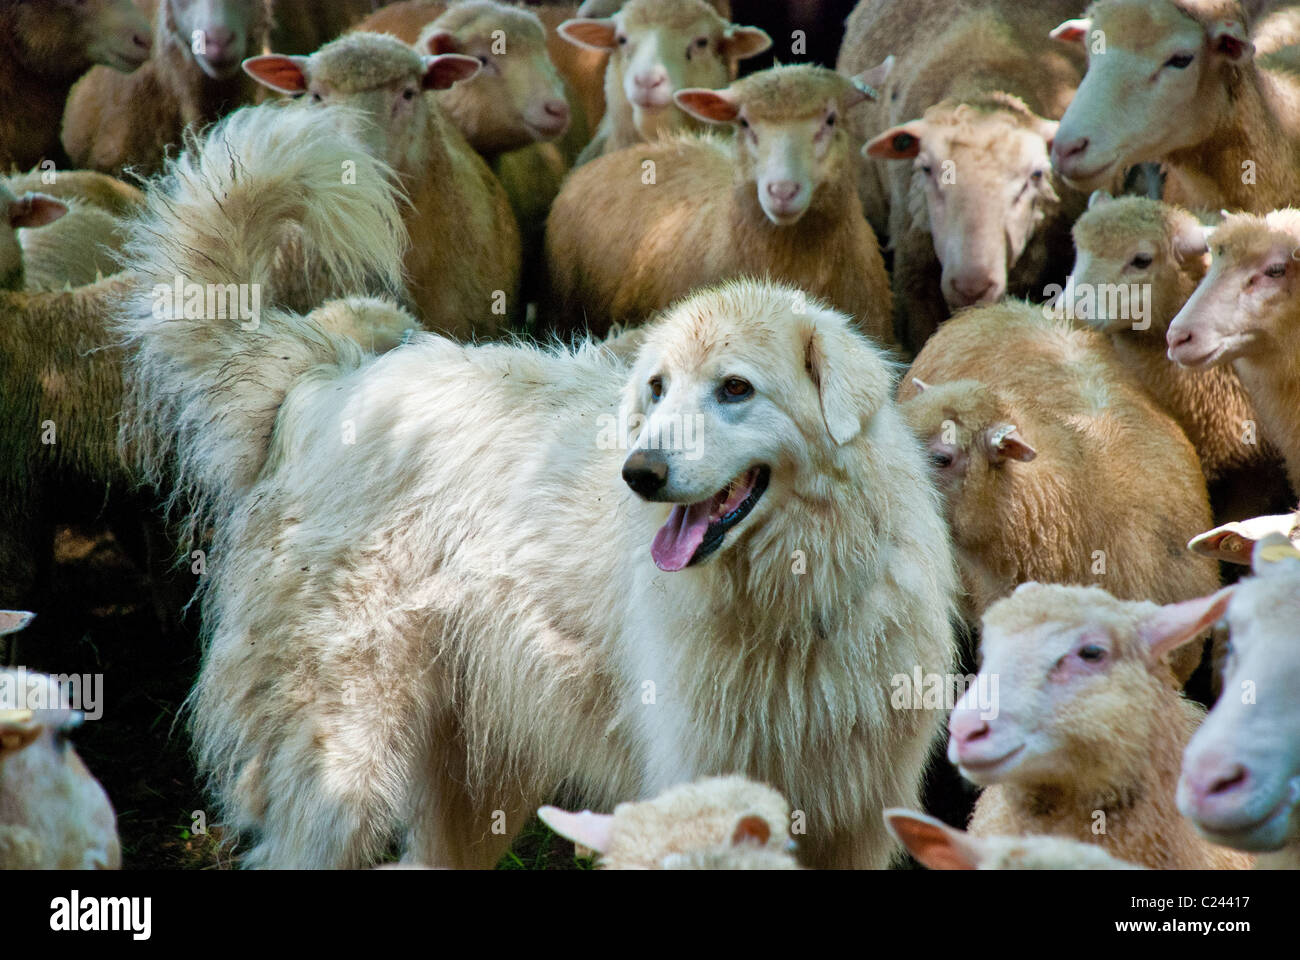 Maremma oder Abruzzese Sheepdog, der Finn-Dorset Schafe bewacht oder hütet, Stone Barns Center for Food and Agriculture, Pocantico Hills, New York, USA Stockfoto